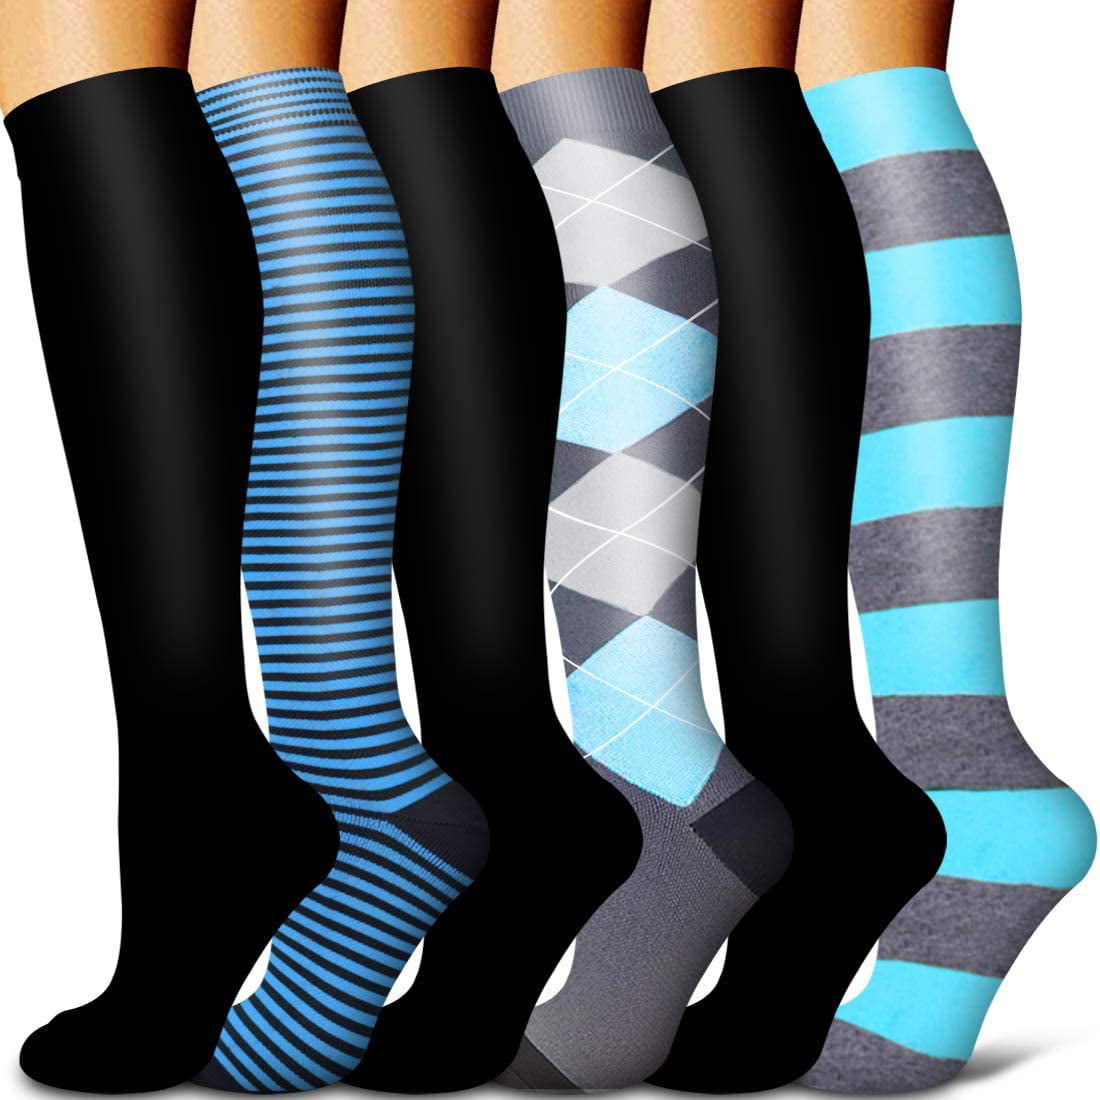 6 Pack Copper Compression Socks for Women and Men Circulation-Best Support for Medical Running,Nursing,Athletic 